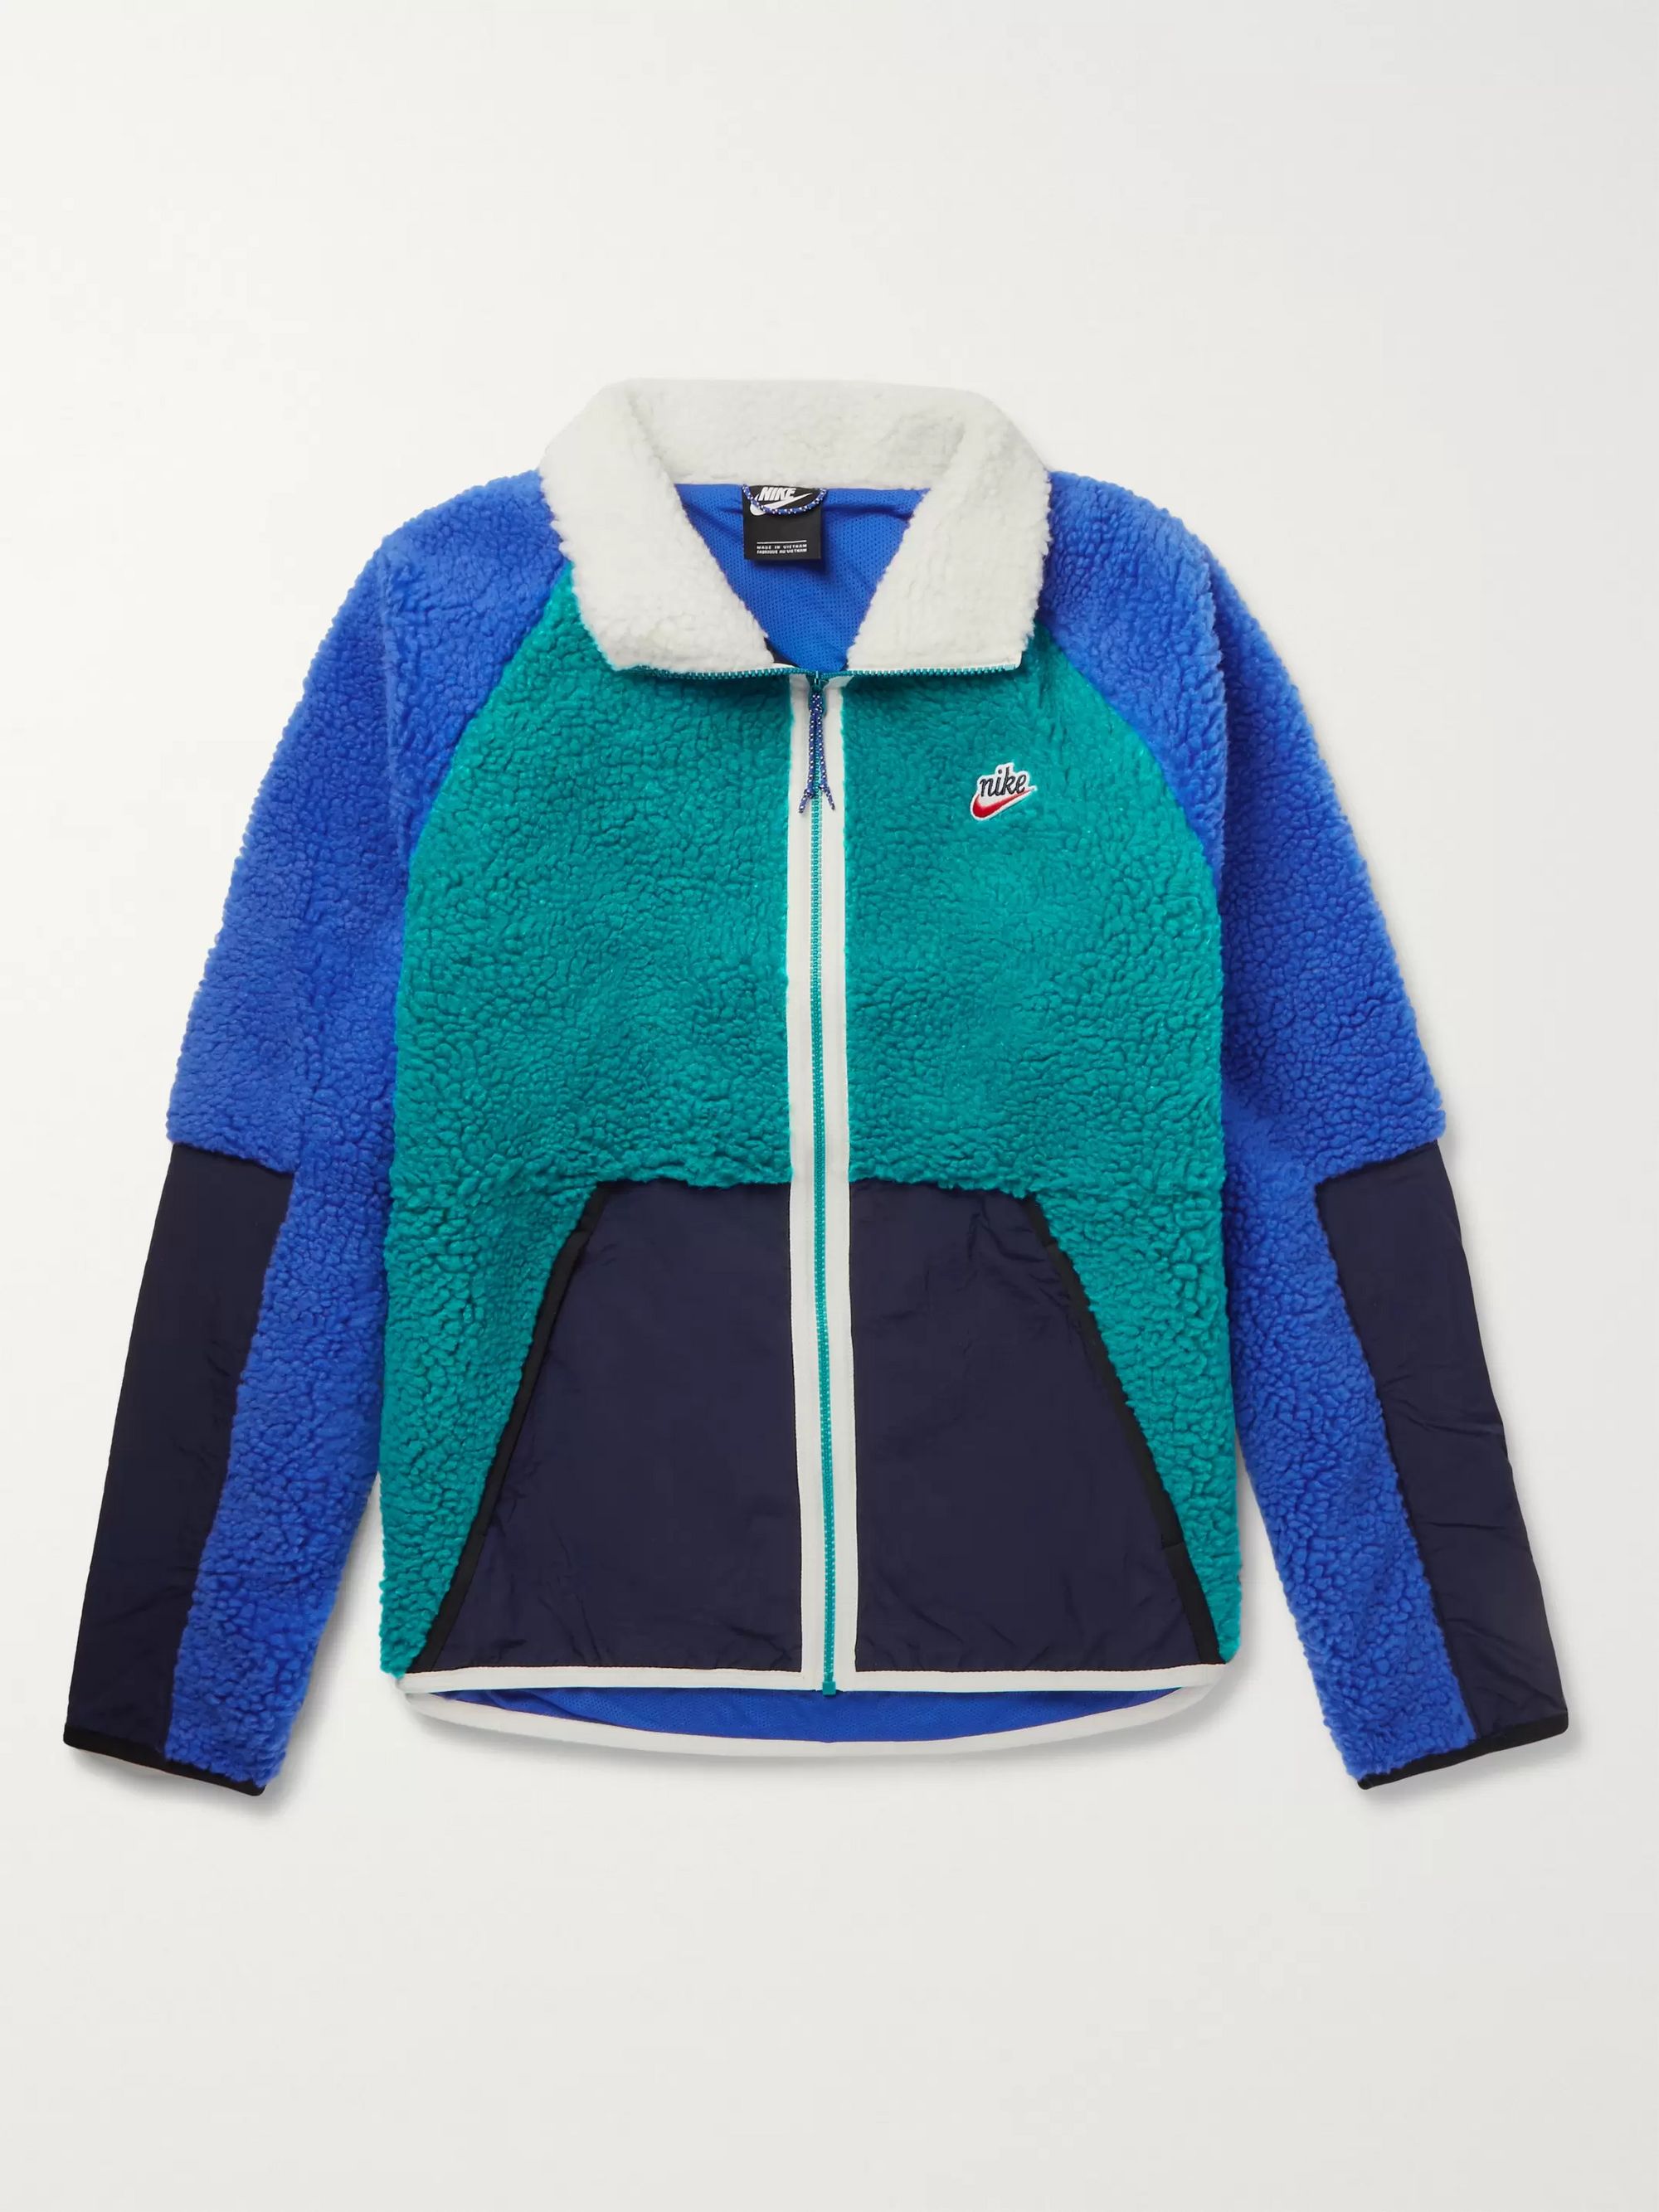 blue nike fleece jacket